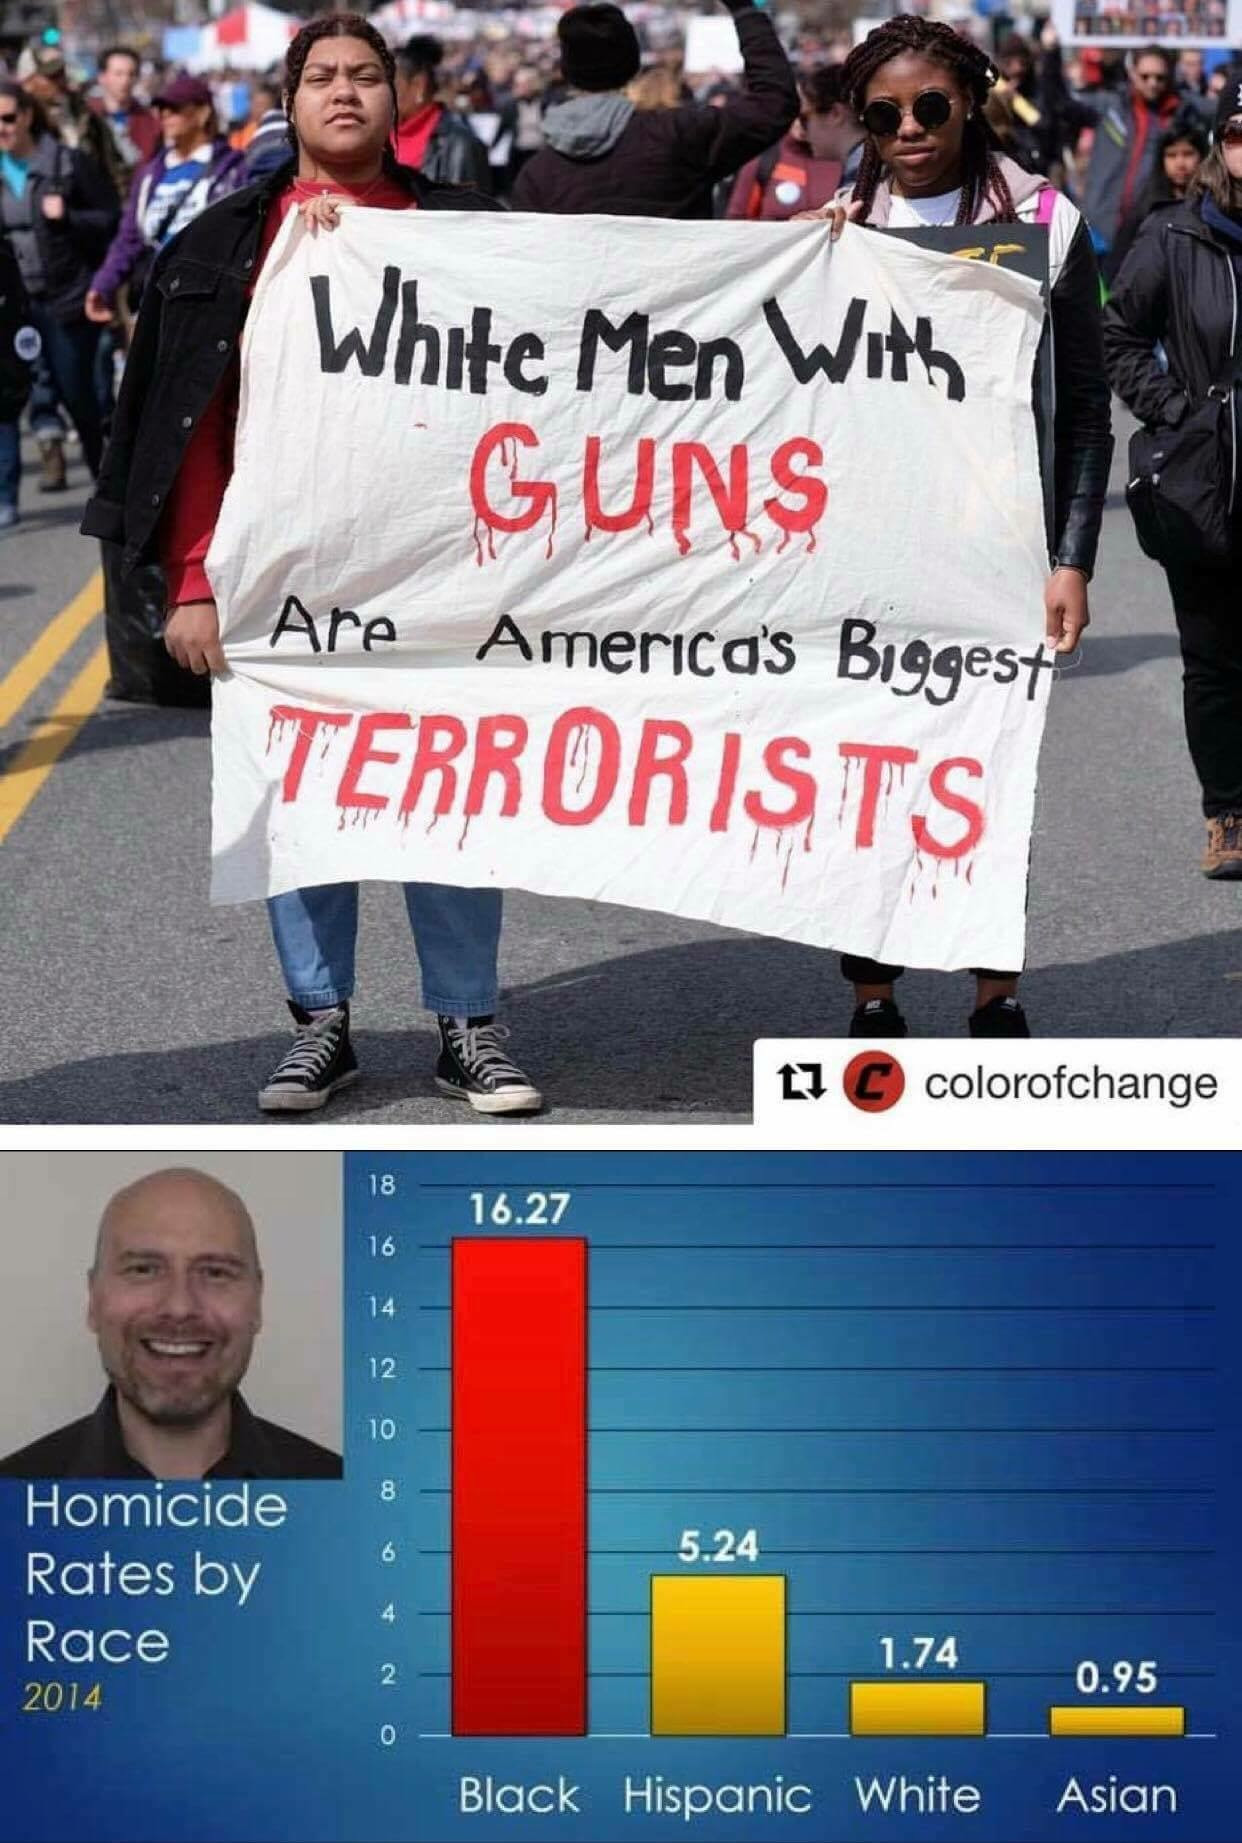 white men with guns are terrorists meme - White Men With Guns Are America's Biggest Terrorists ti colorofchange 16.27 5.24 Homicide Rates by Race 2014 1.74 0.95 Black Hispanic White Asian